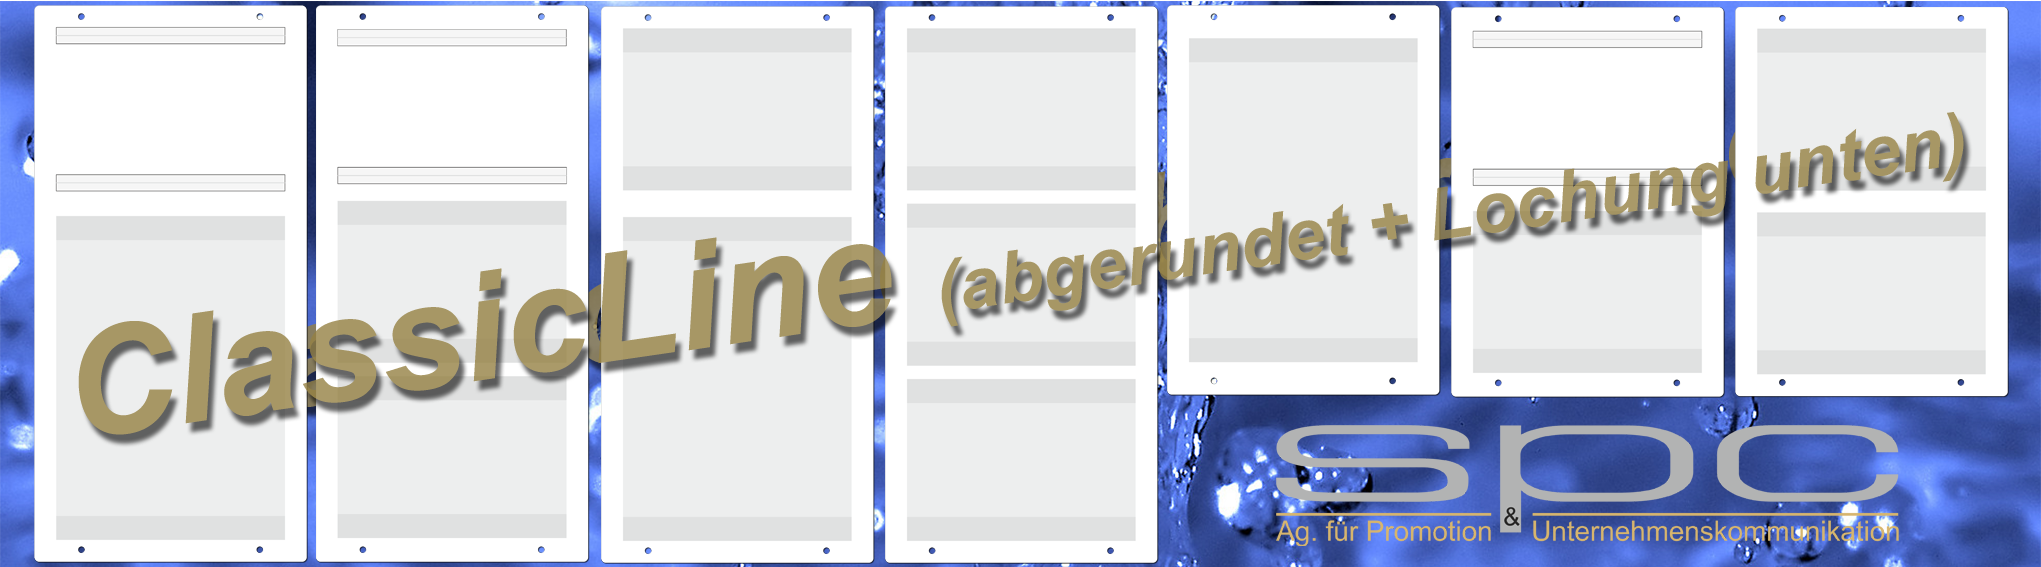 Banner-GS-ClassicLine-abgerundet-Lochung